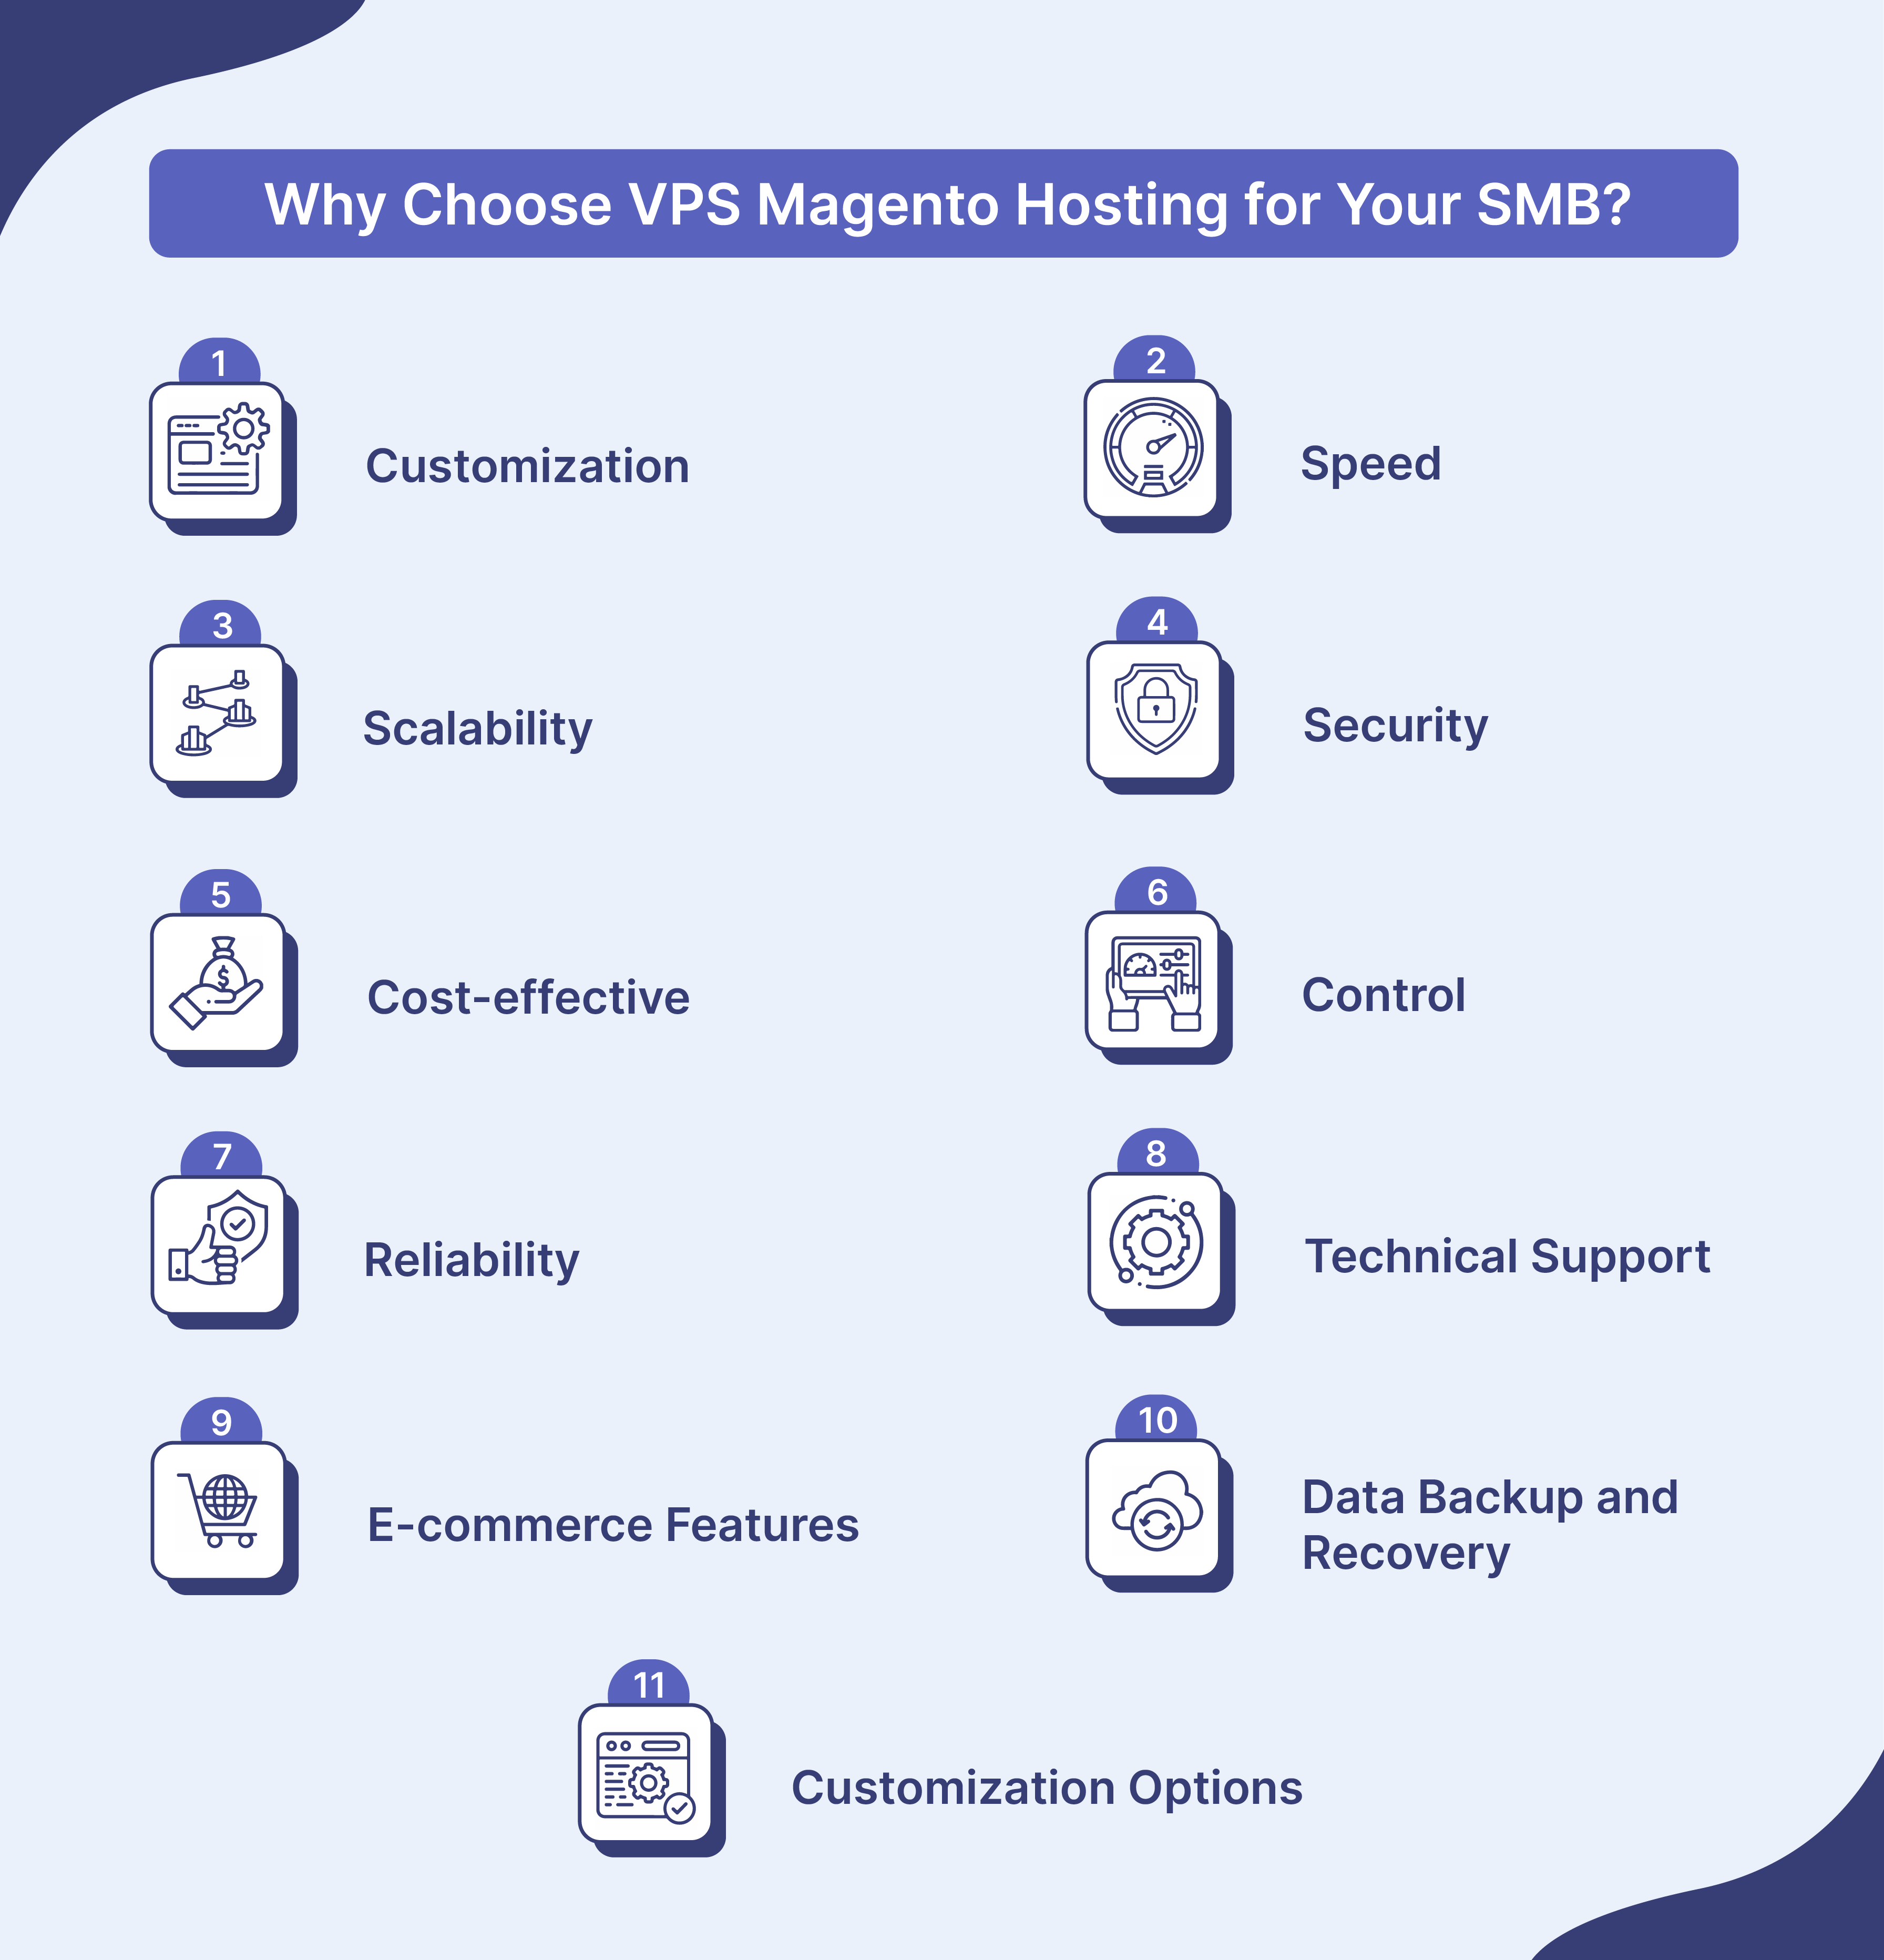 Choosing VPS Magento Hosting